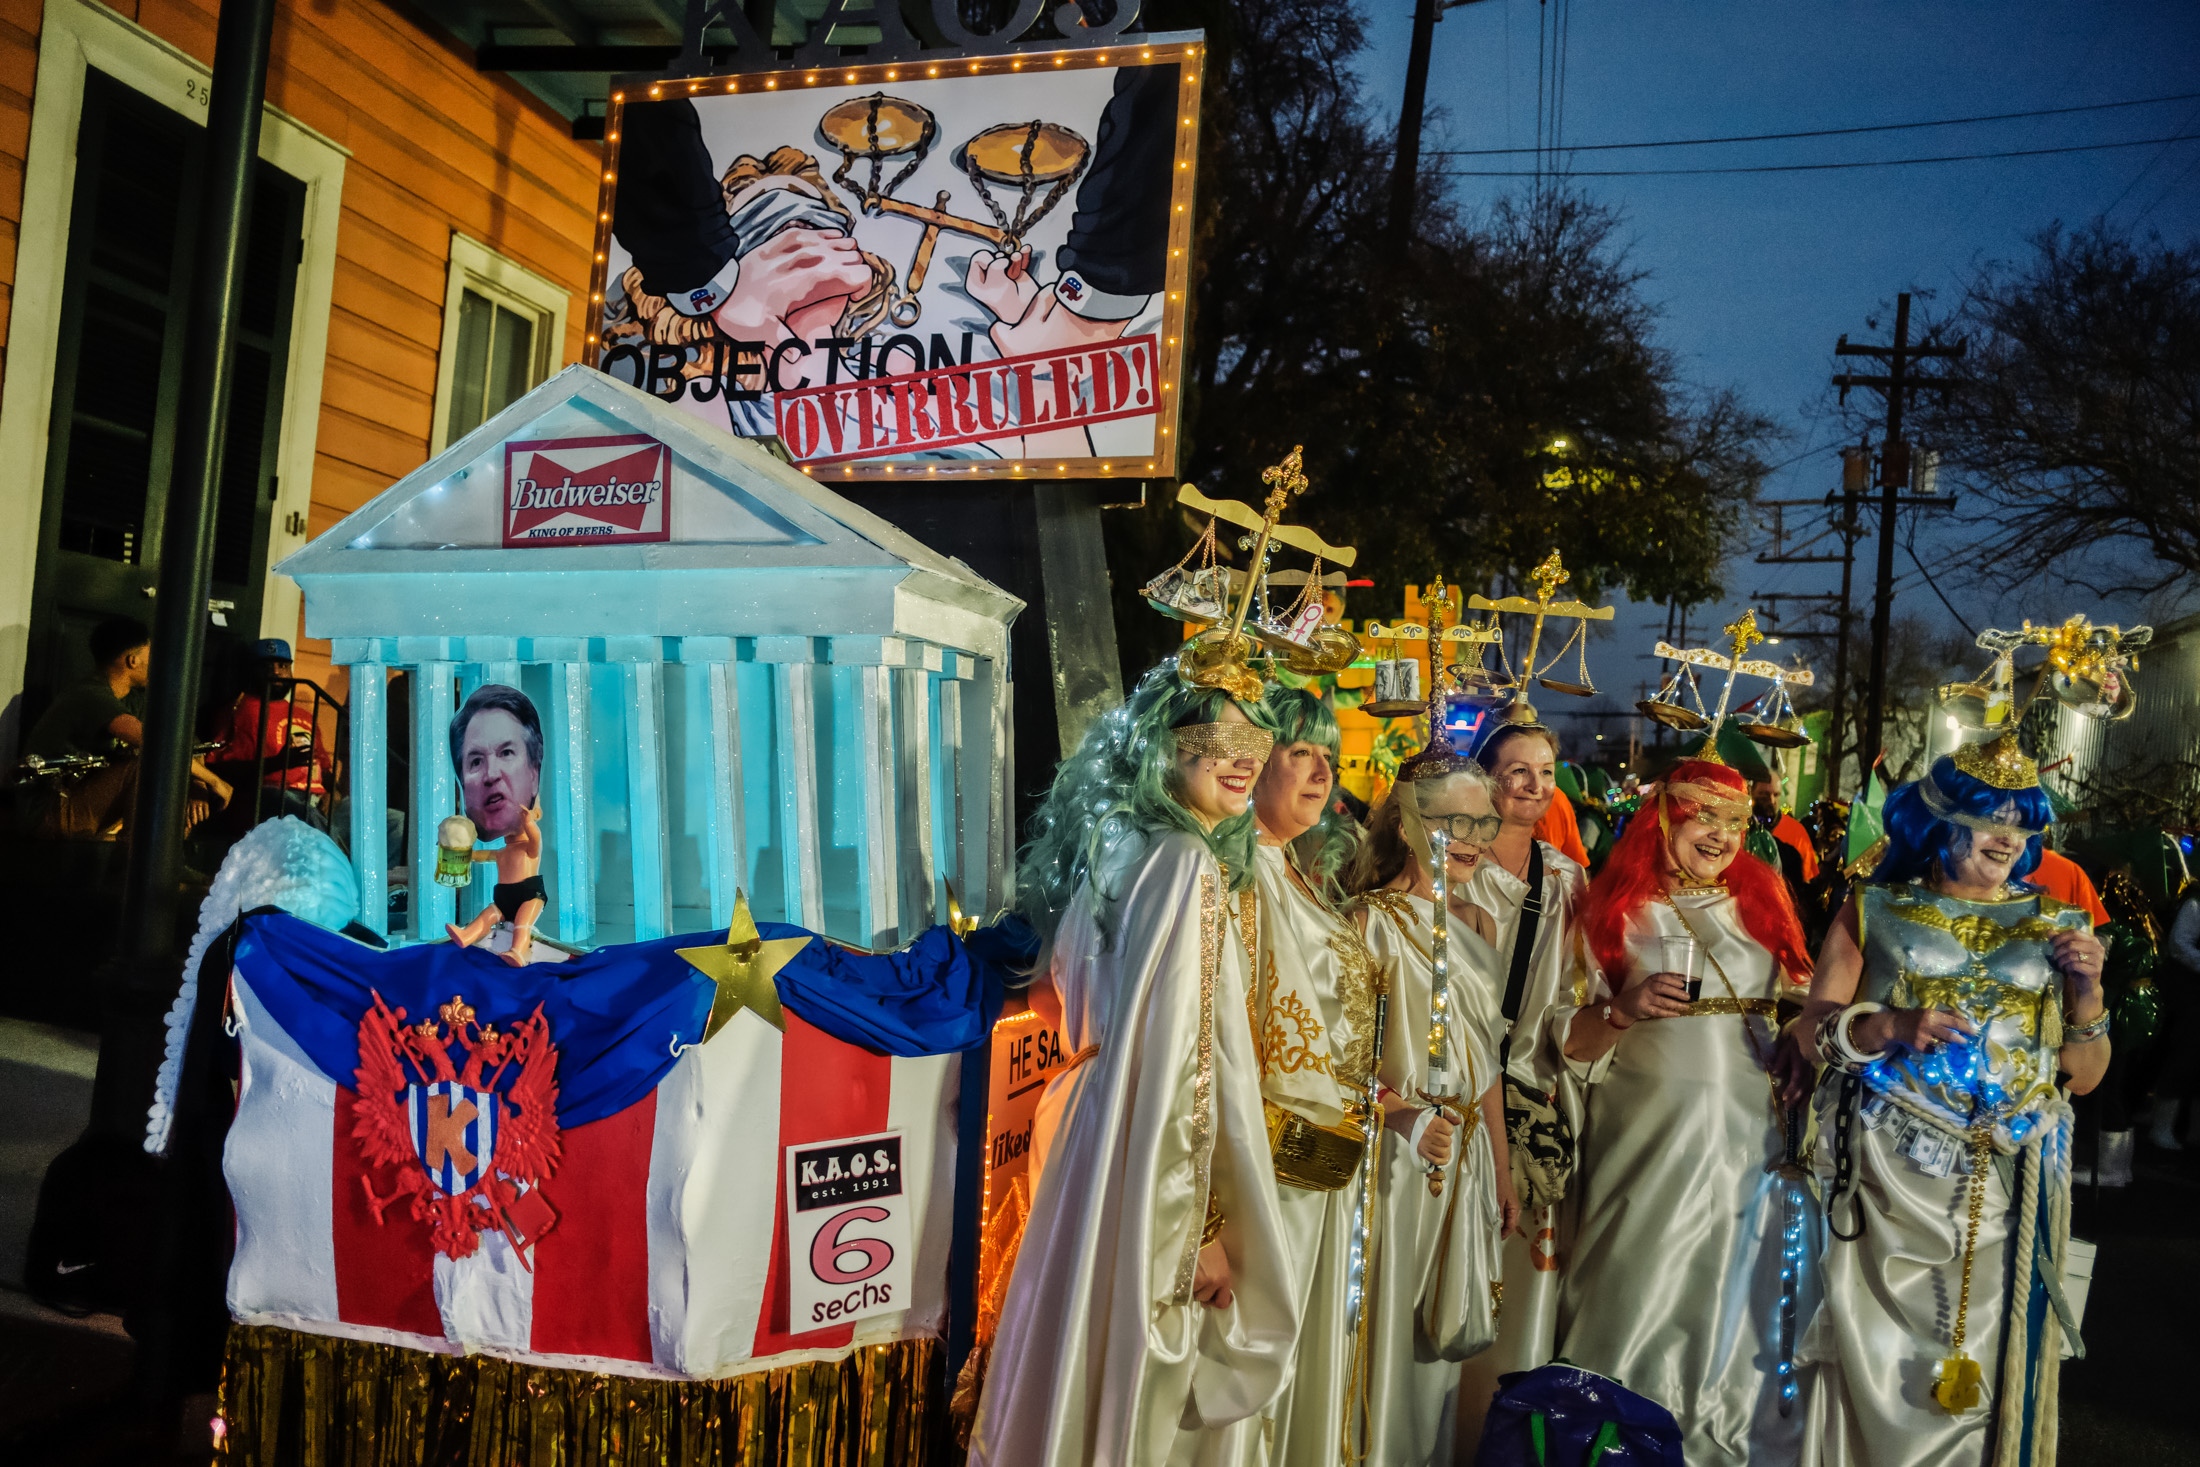 Carnival, New Orleans - Krewe du Veiu Second Line Parade